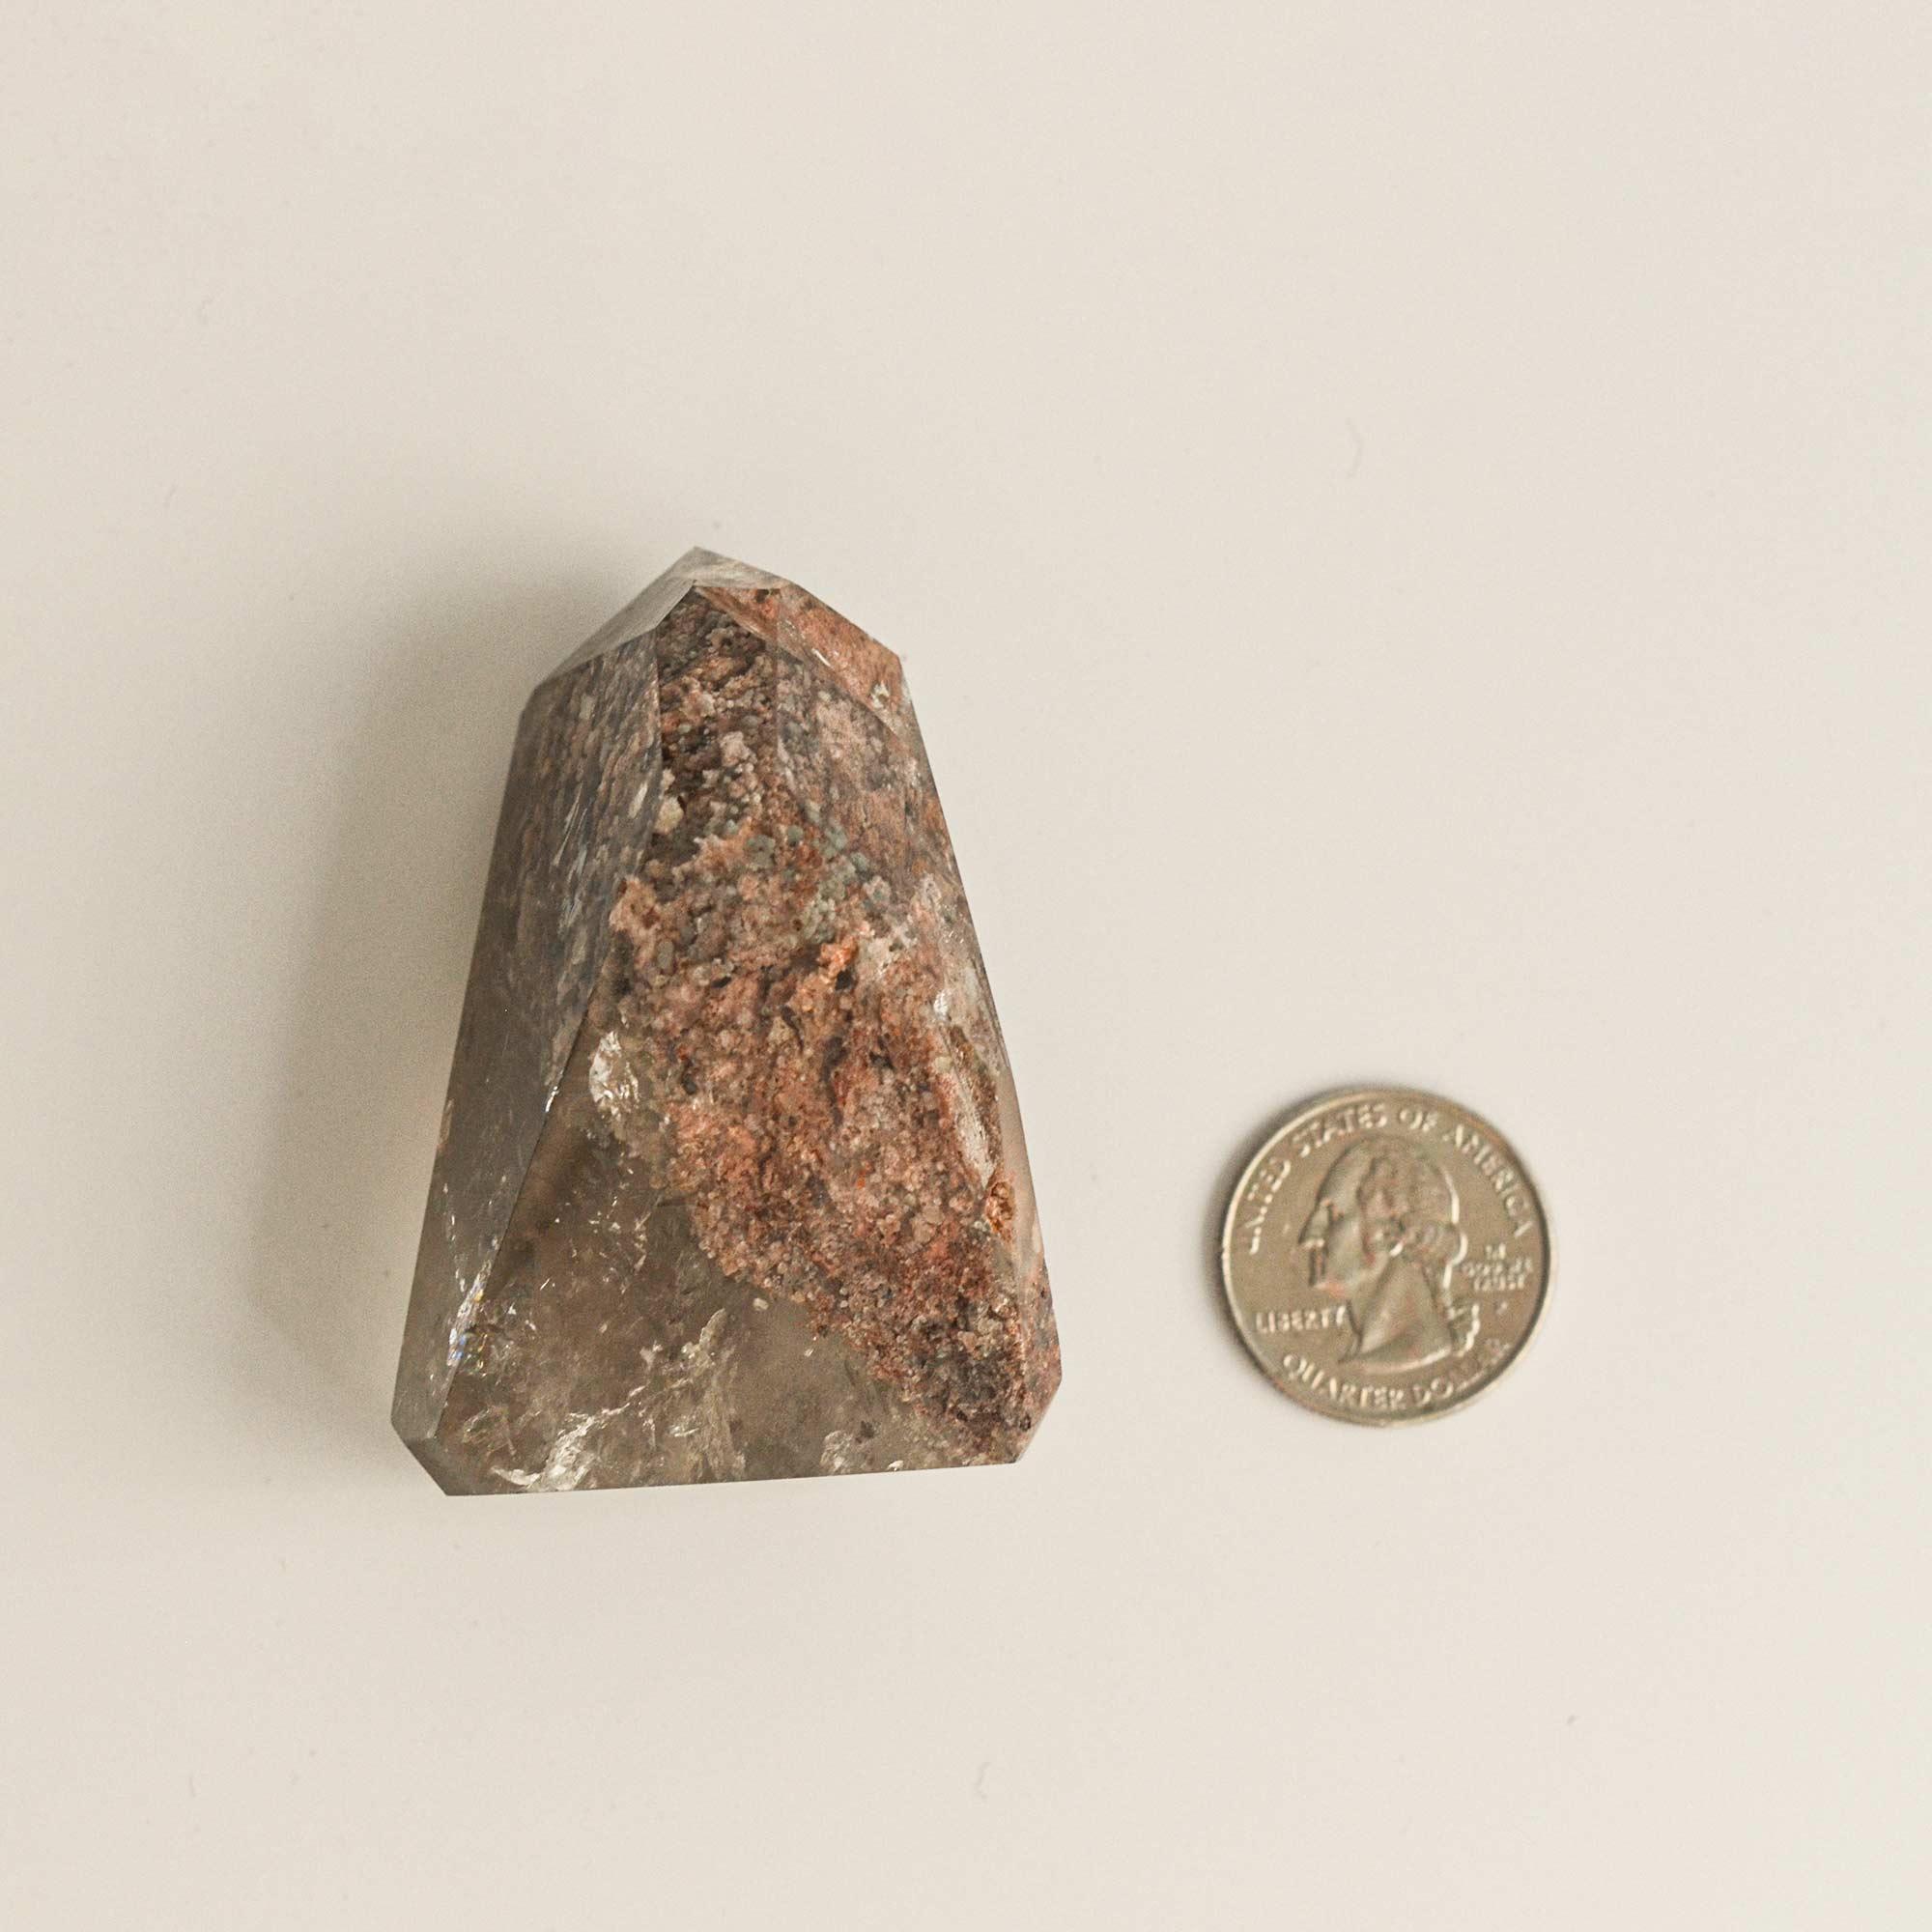 large amethyst phantom quartz and coin